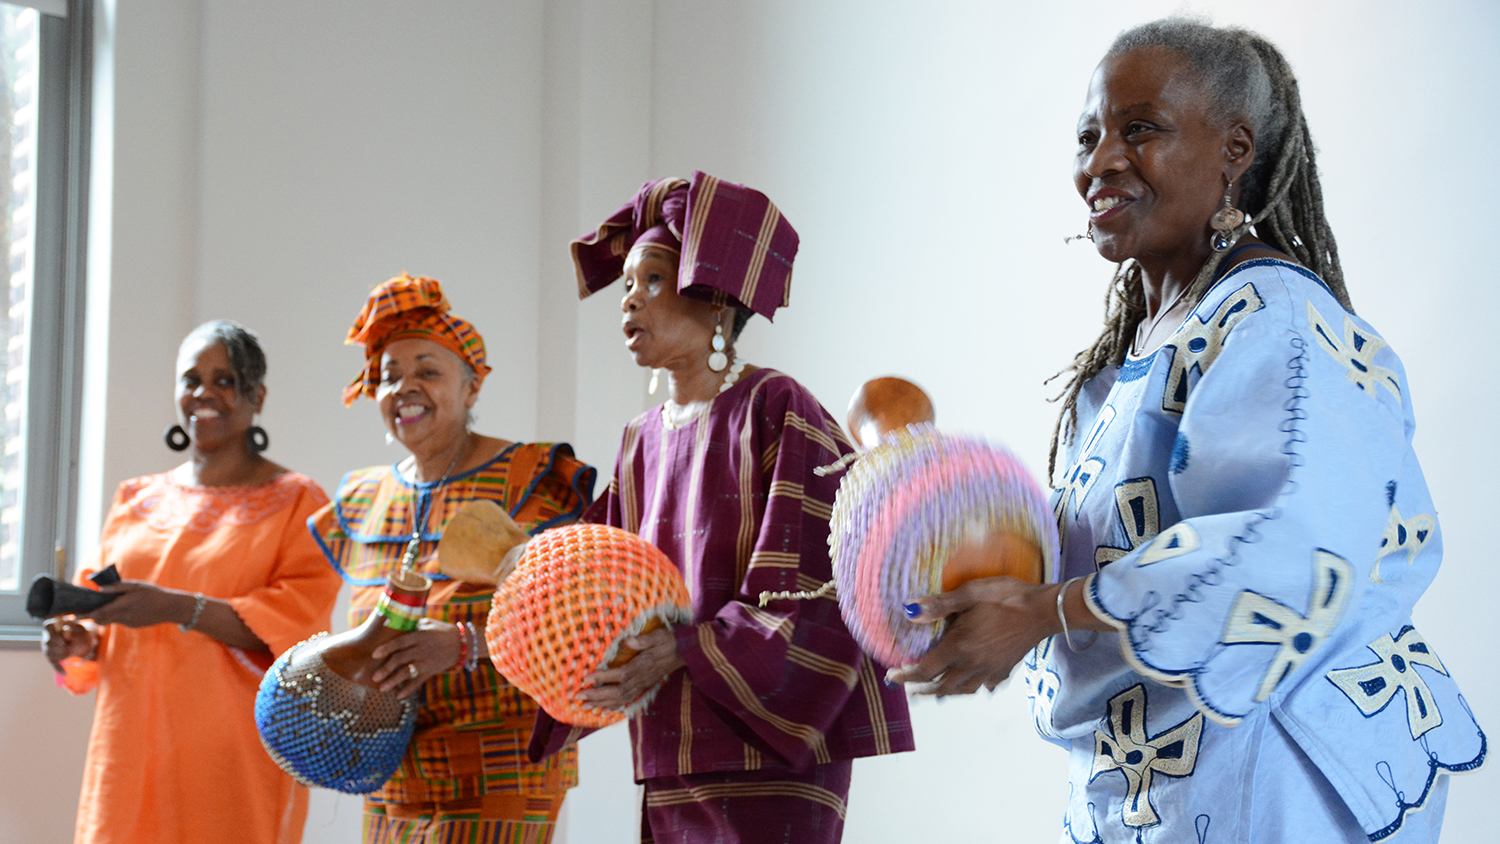 Women in African garb performing.